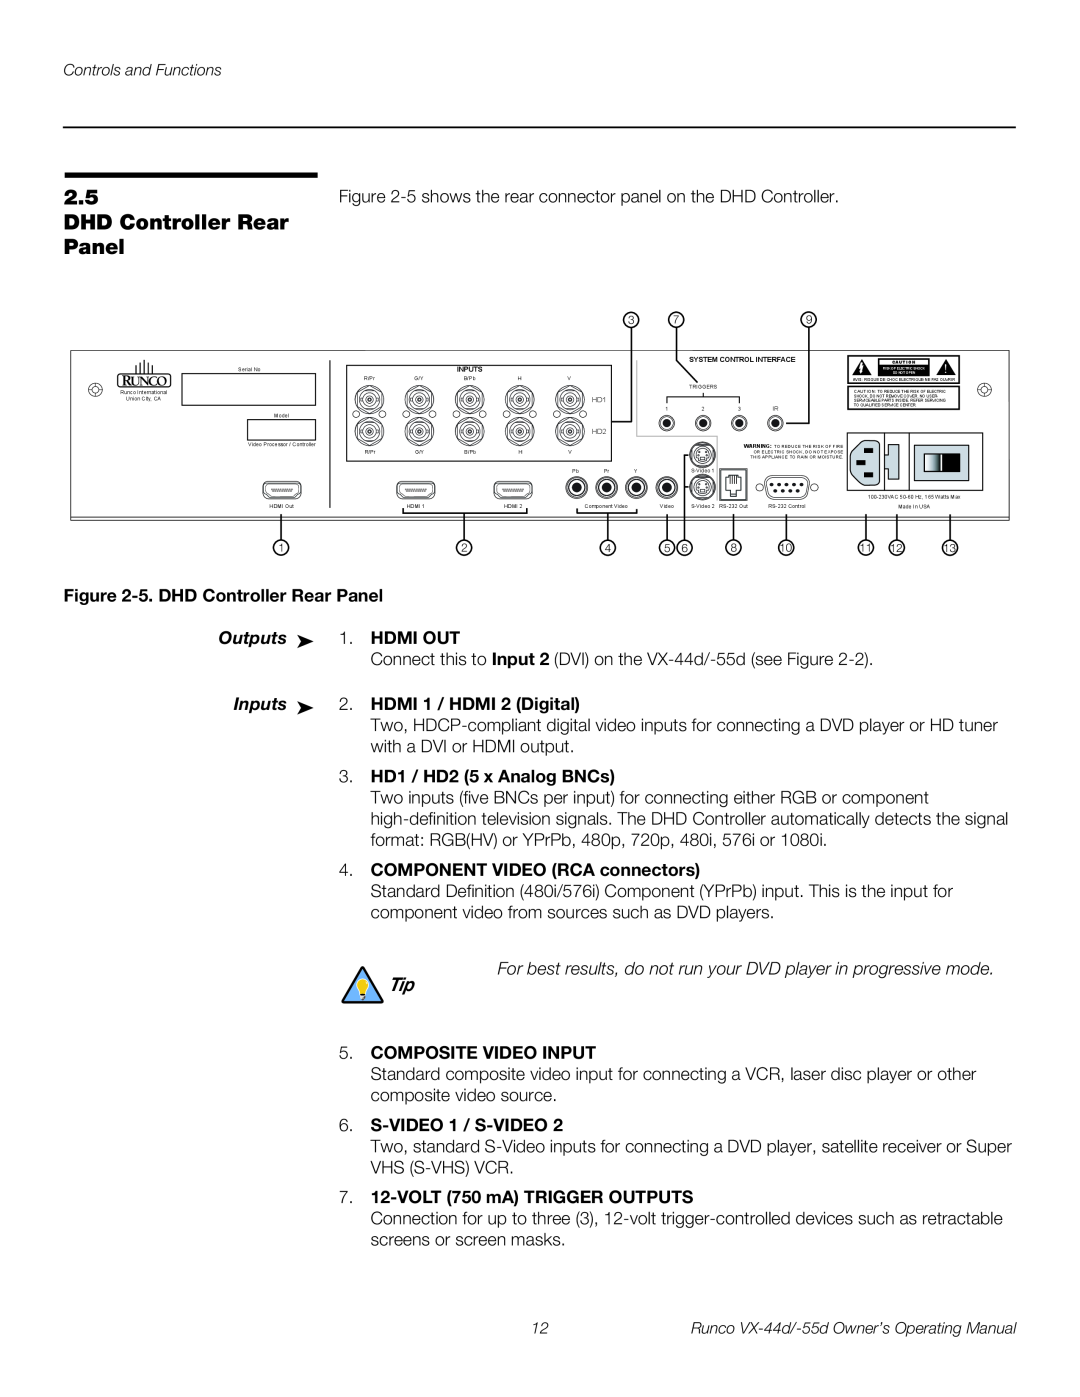 Runco 1080p manual 5. DHD Controller Rear Panel, Inputs 2. HDMI 1 / HDMI 2 Digital, 3. HD1 / HD2 5 x Analog BNCs 